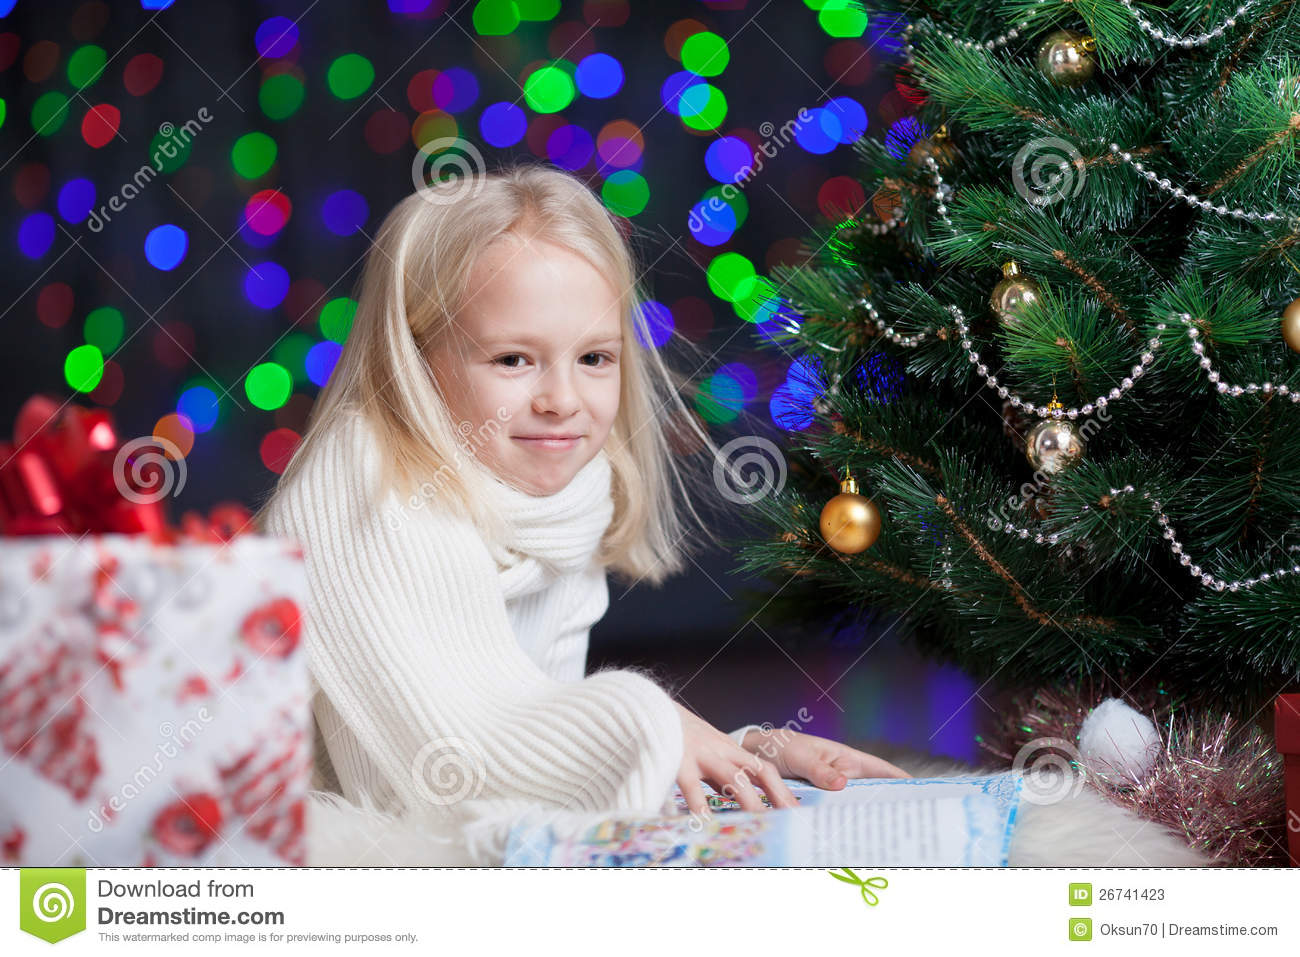 Child Girl Reading Book Under Christmas Tree Stock Photos   Image    